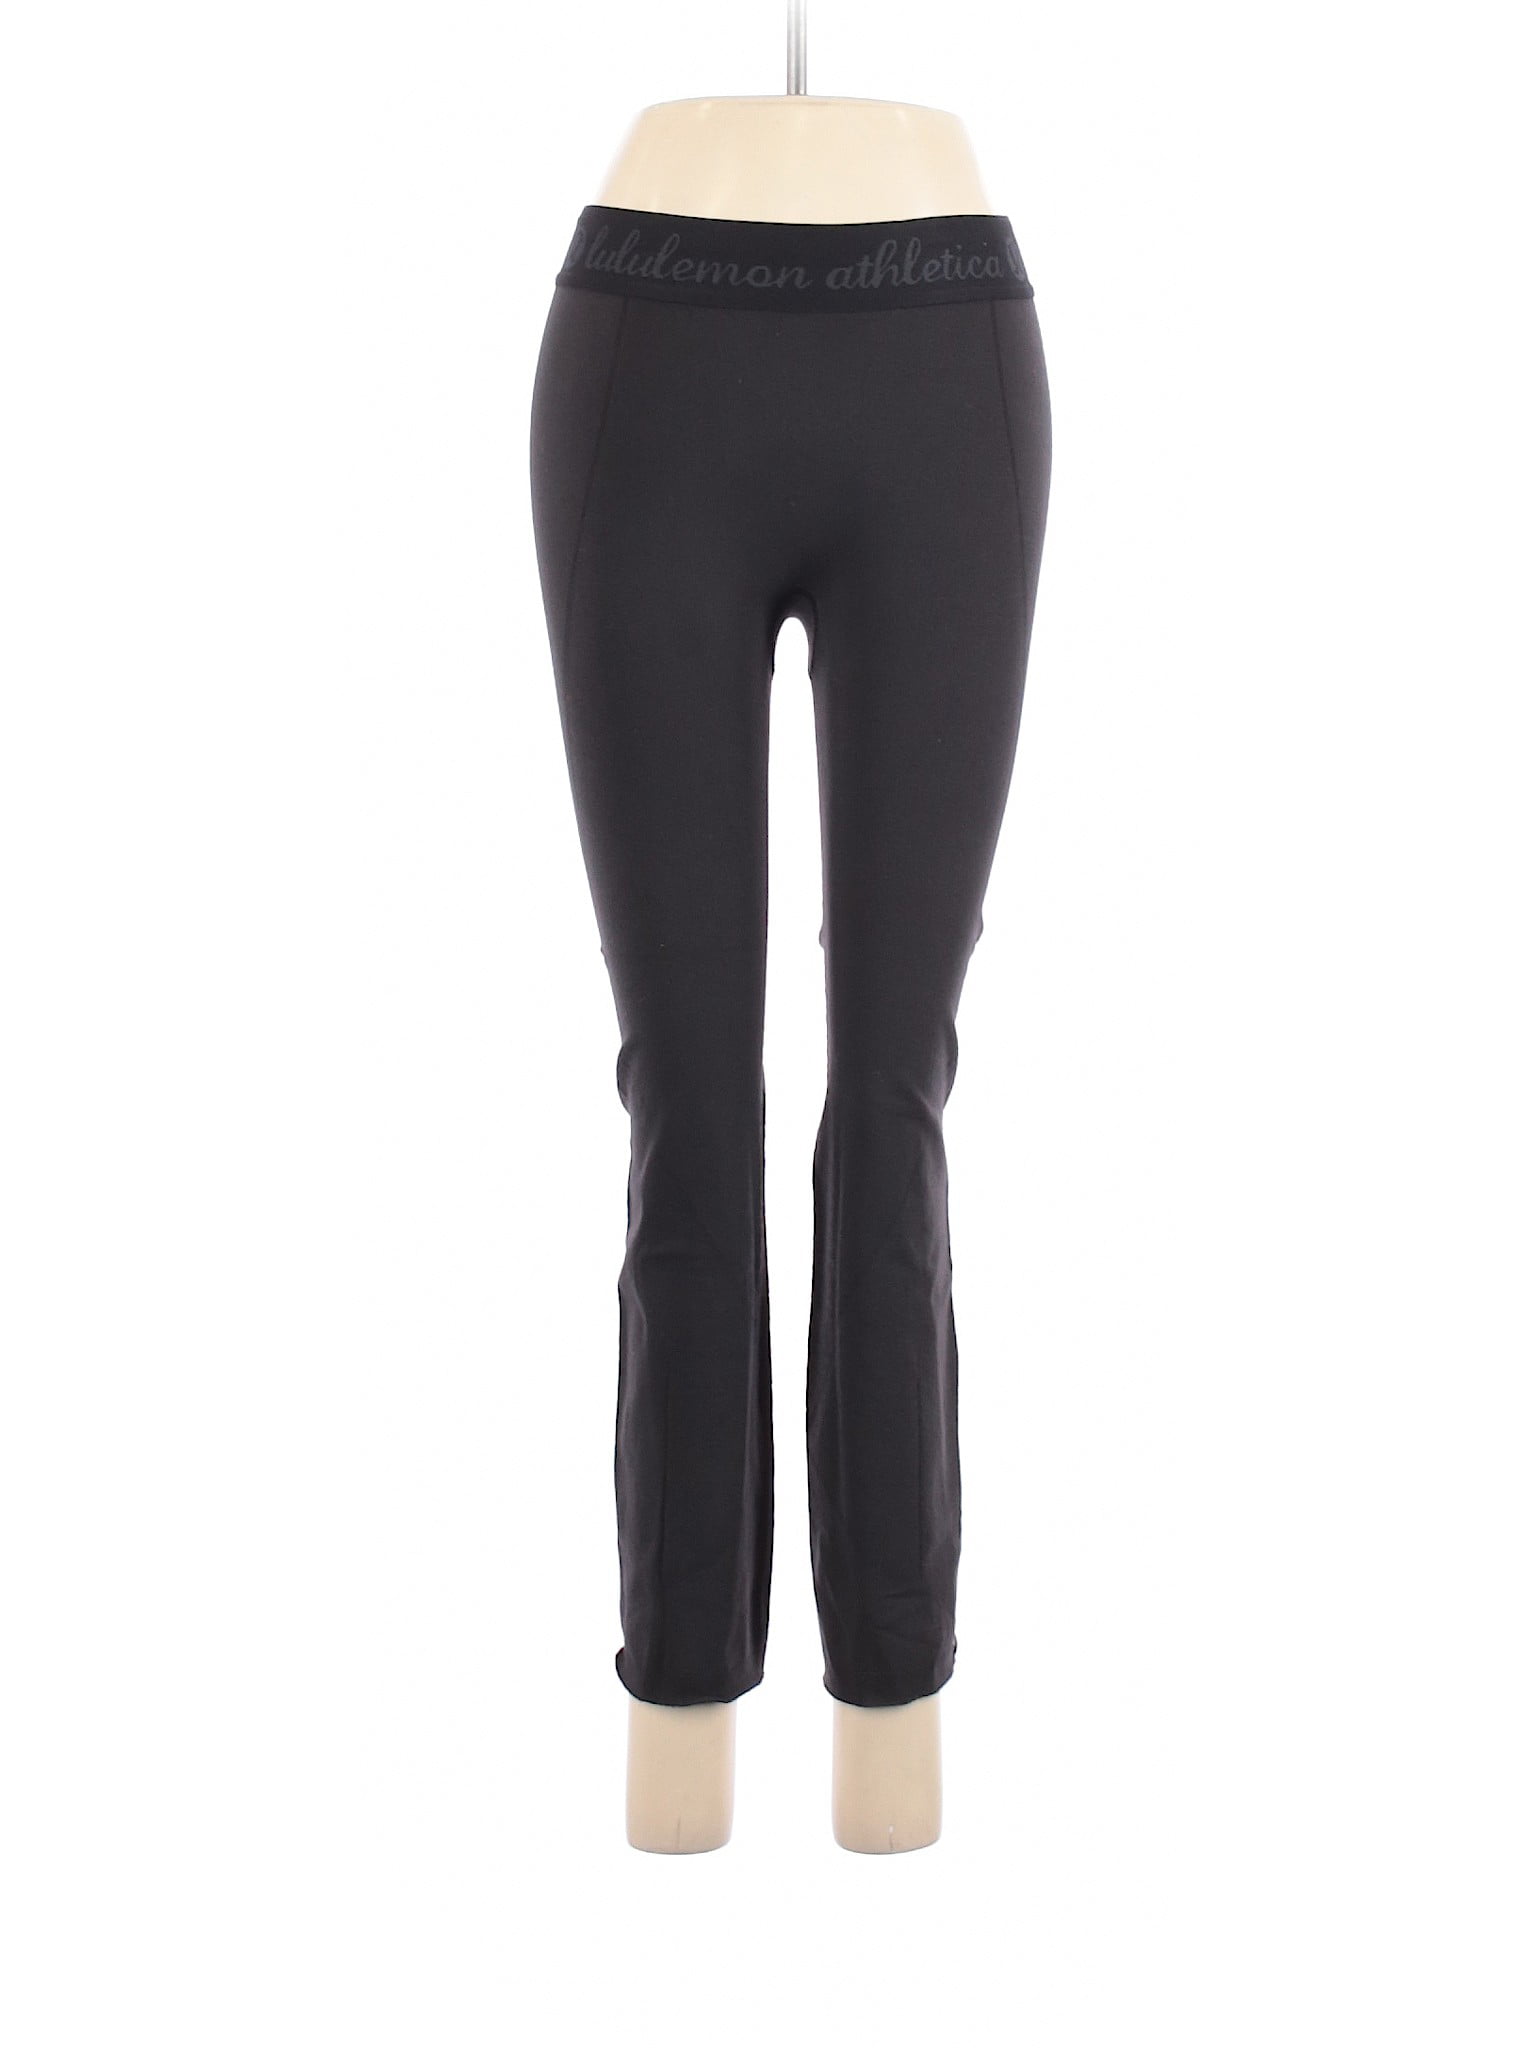 lululemon - Pre-Owned Lululemon Athletica Women's Size 6 Active Pants ...